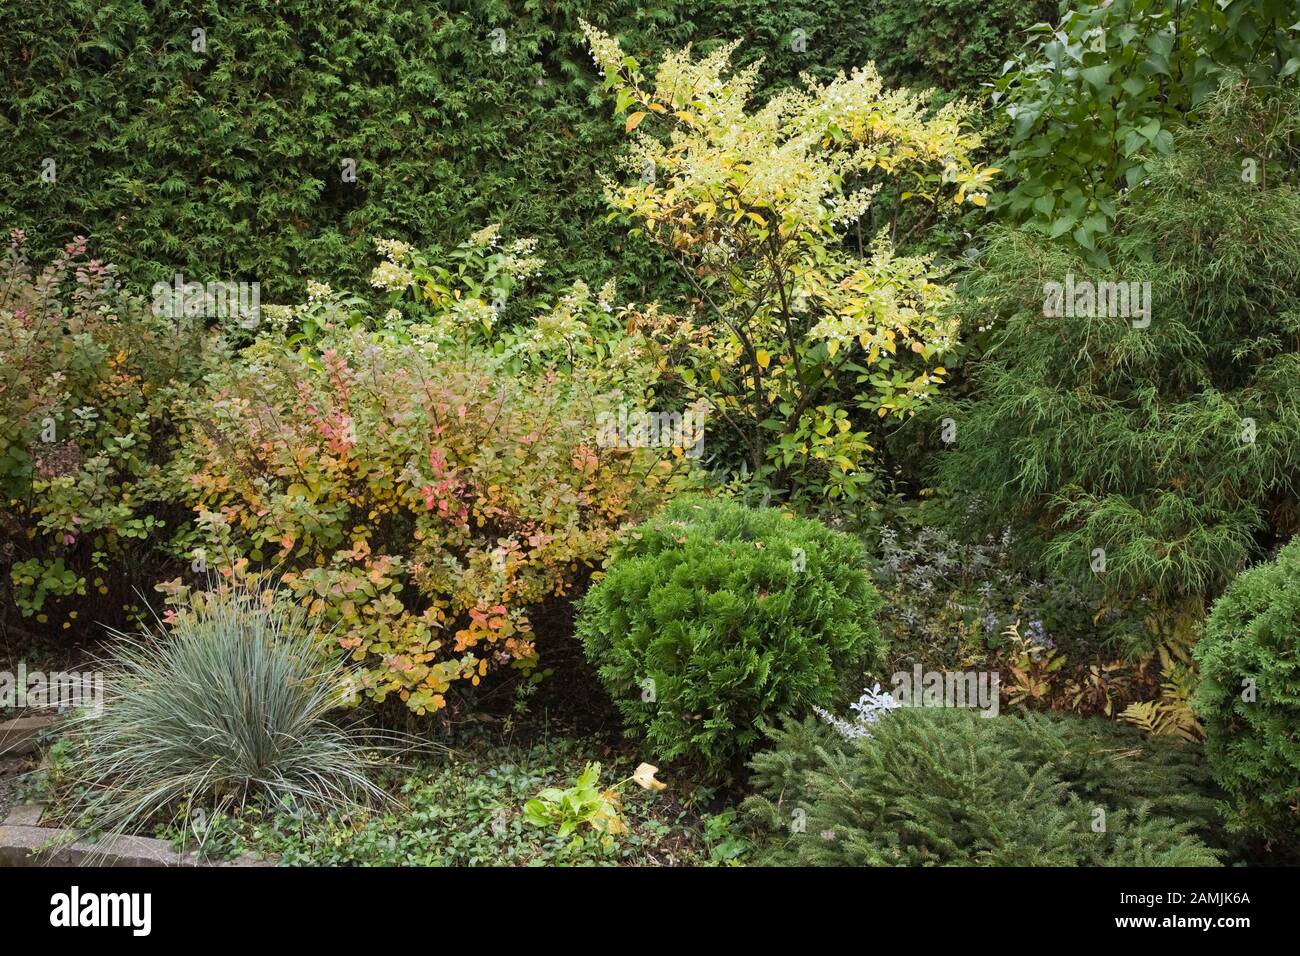 Mixed border with globe shaped Thuja - Cedar shrub, Festuca - Grass plant, Juniperus - Juniper shrub in backyard garden in autumn. Stock Photo